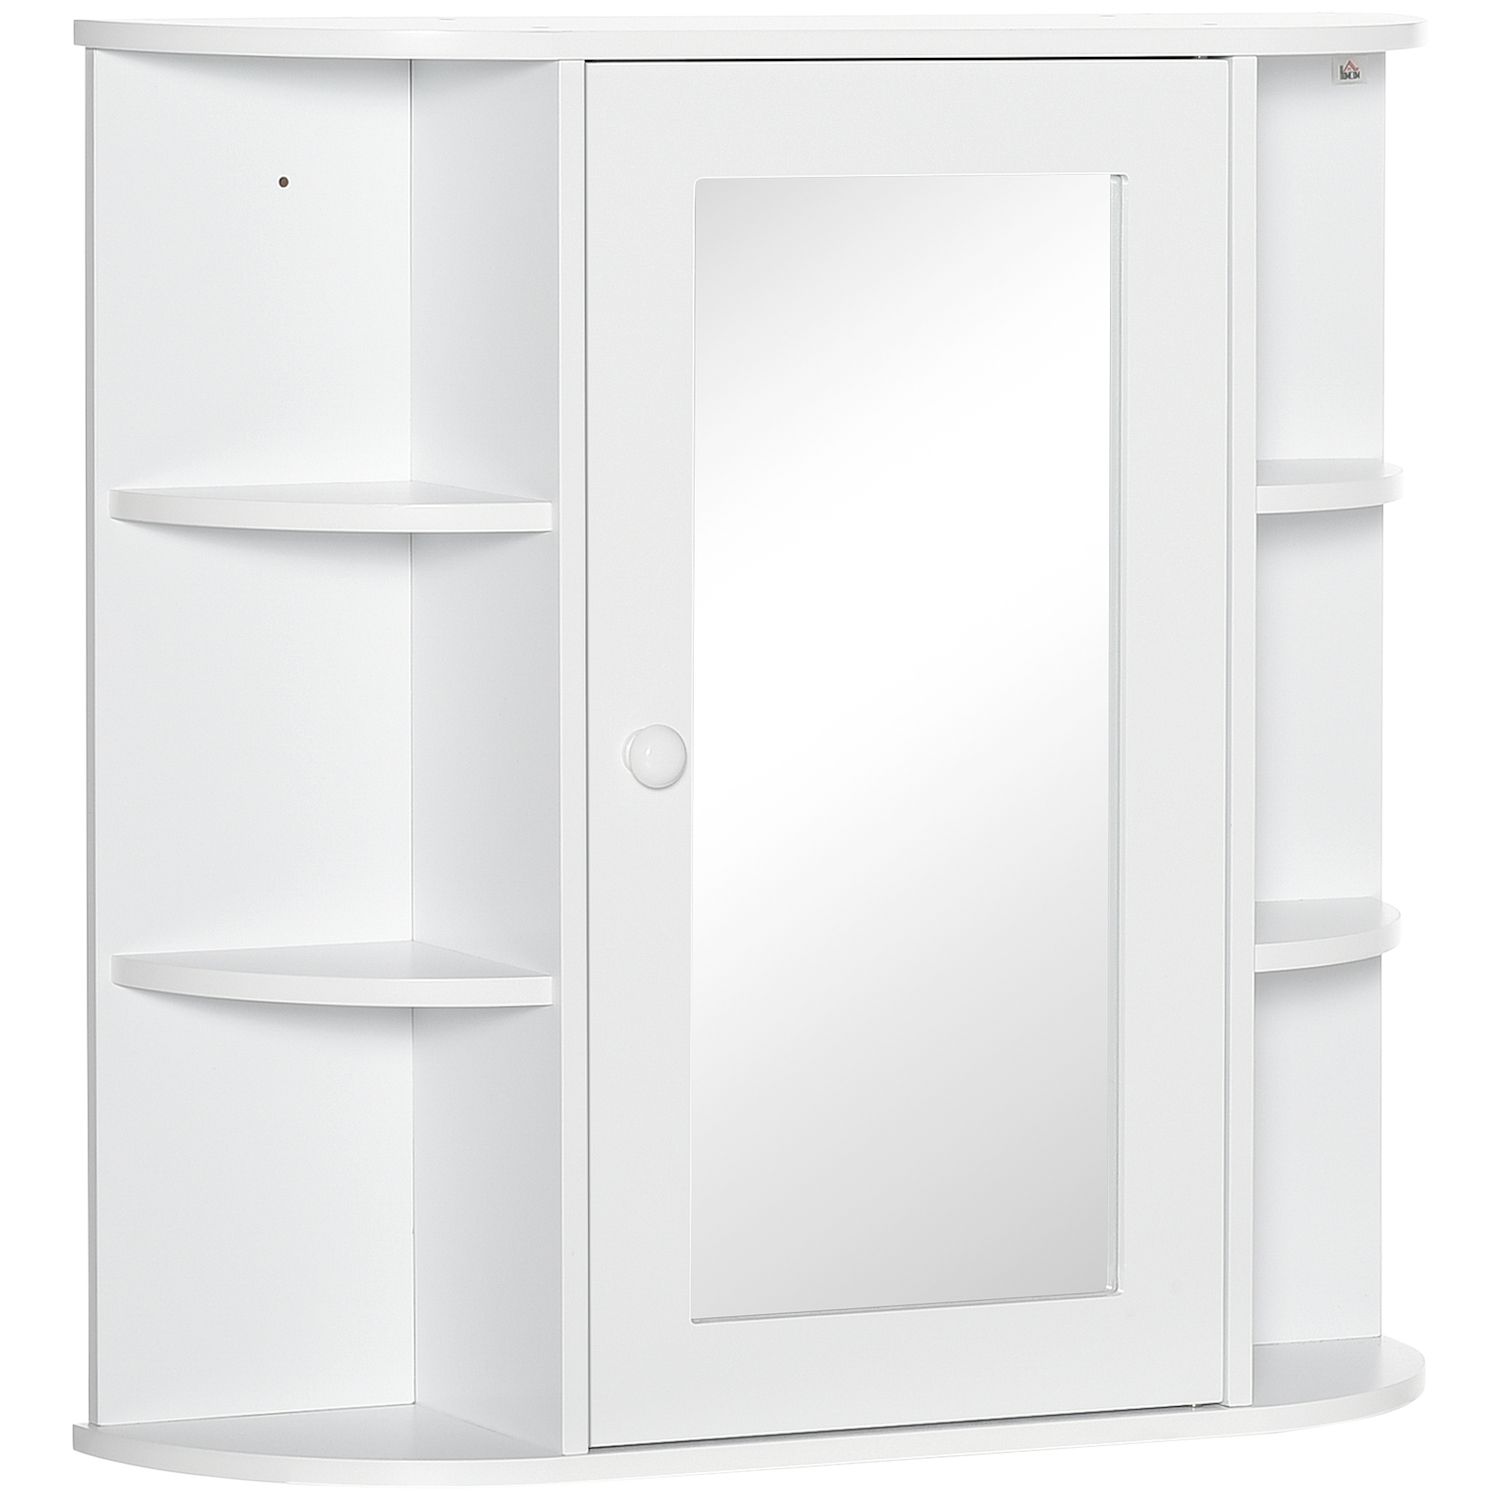 HomCom 24 Under Sink Storage Cabinet with 2 Doors and Shelves